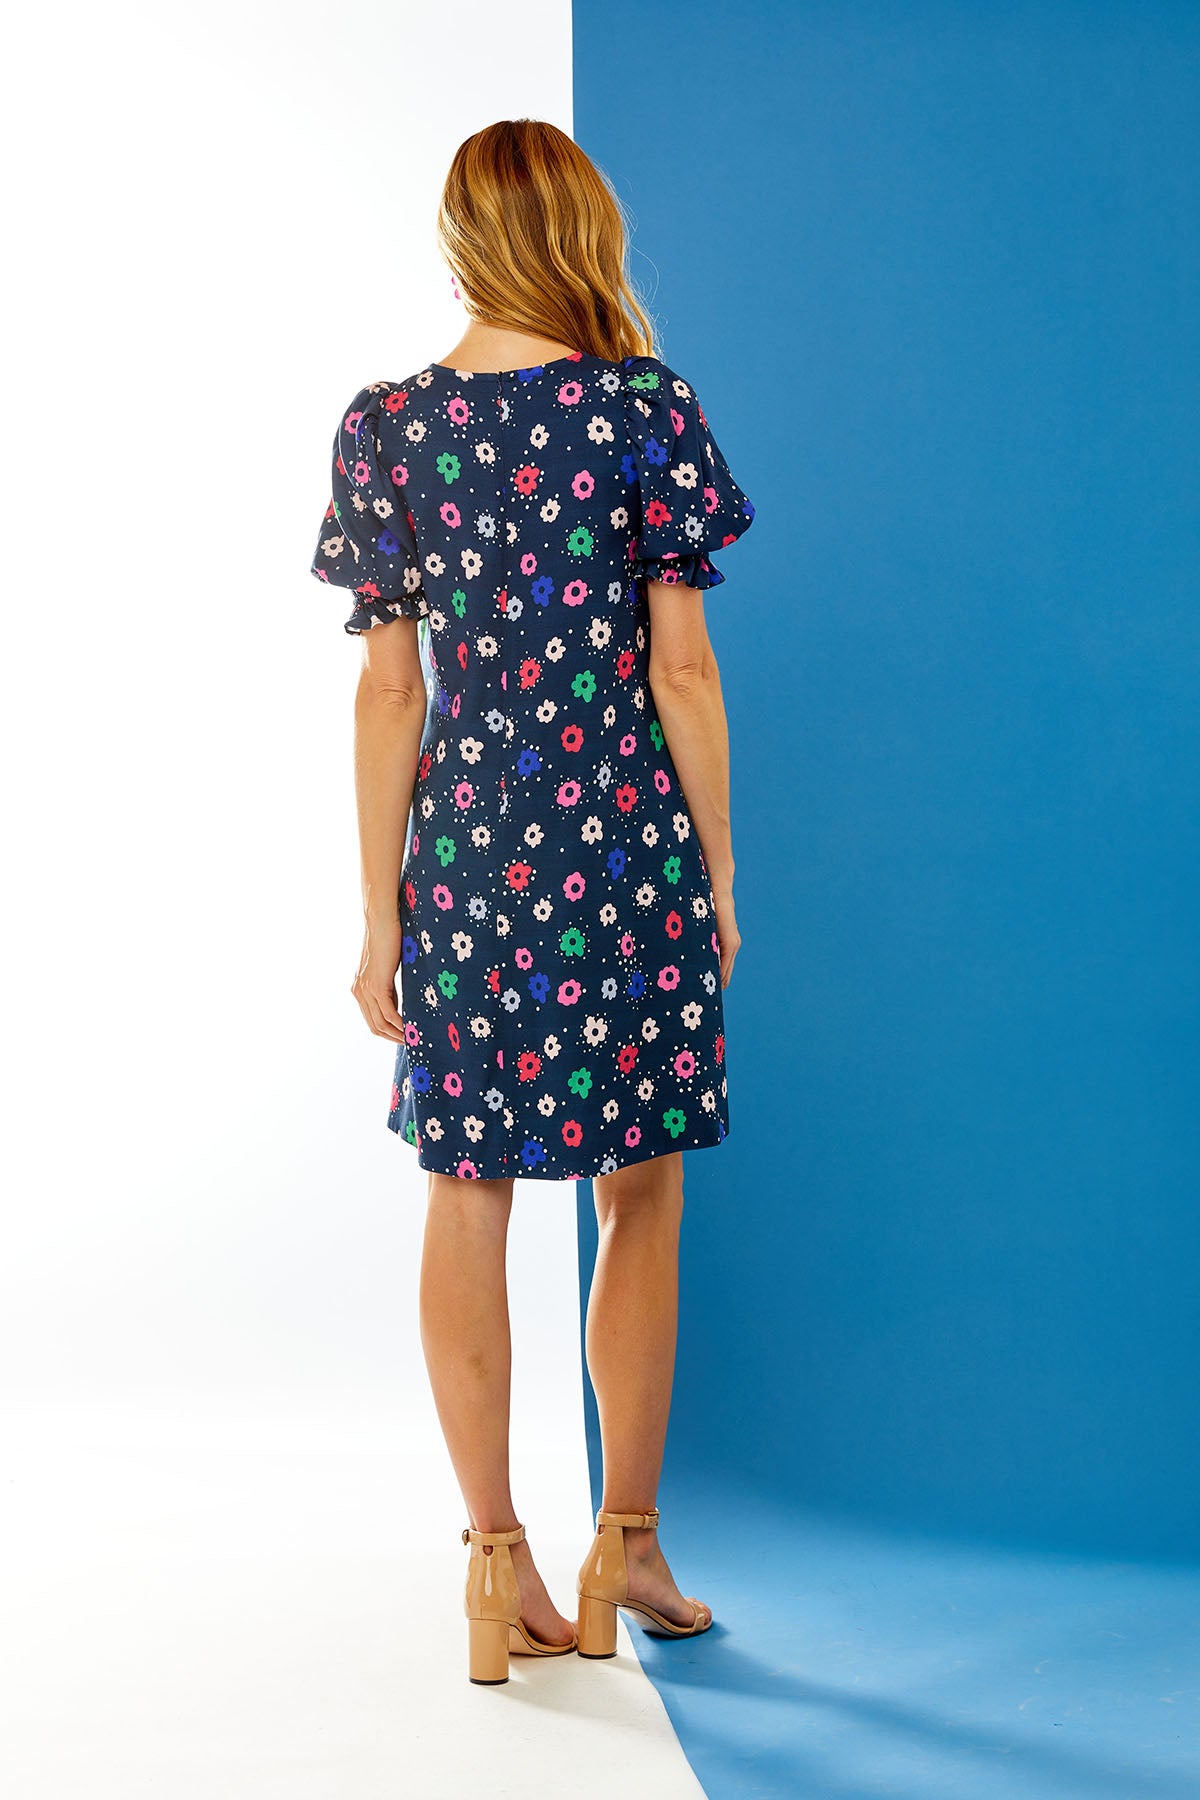 Woman in daisy print dress